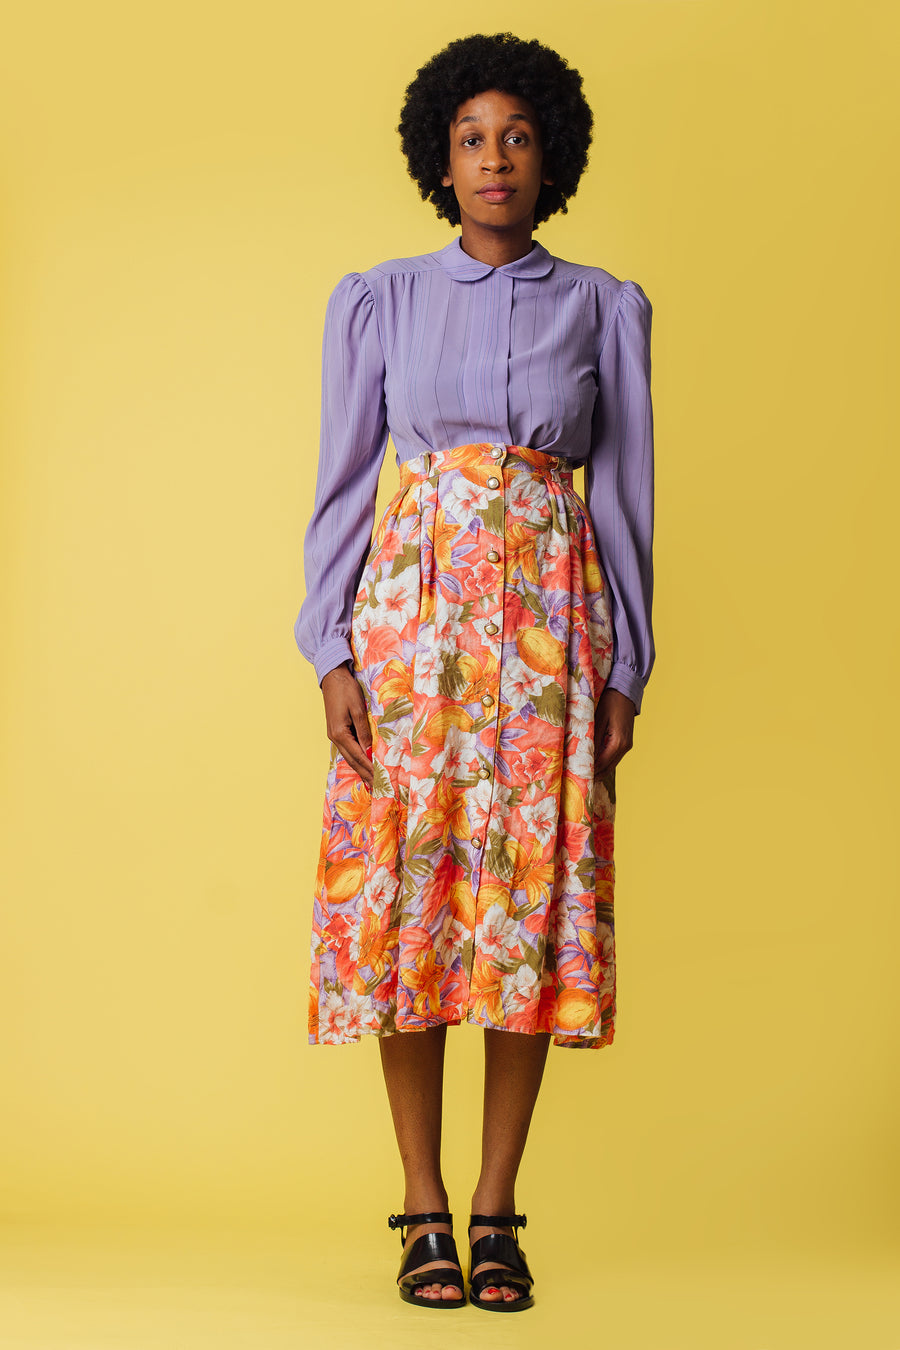 Vintage Floral Highwaist Skirt | S